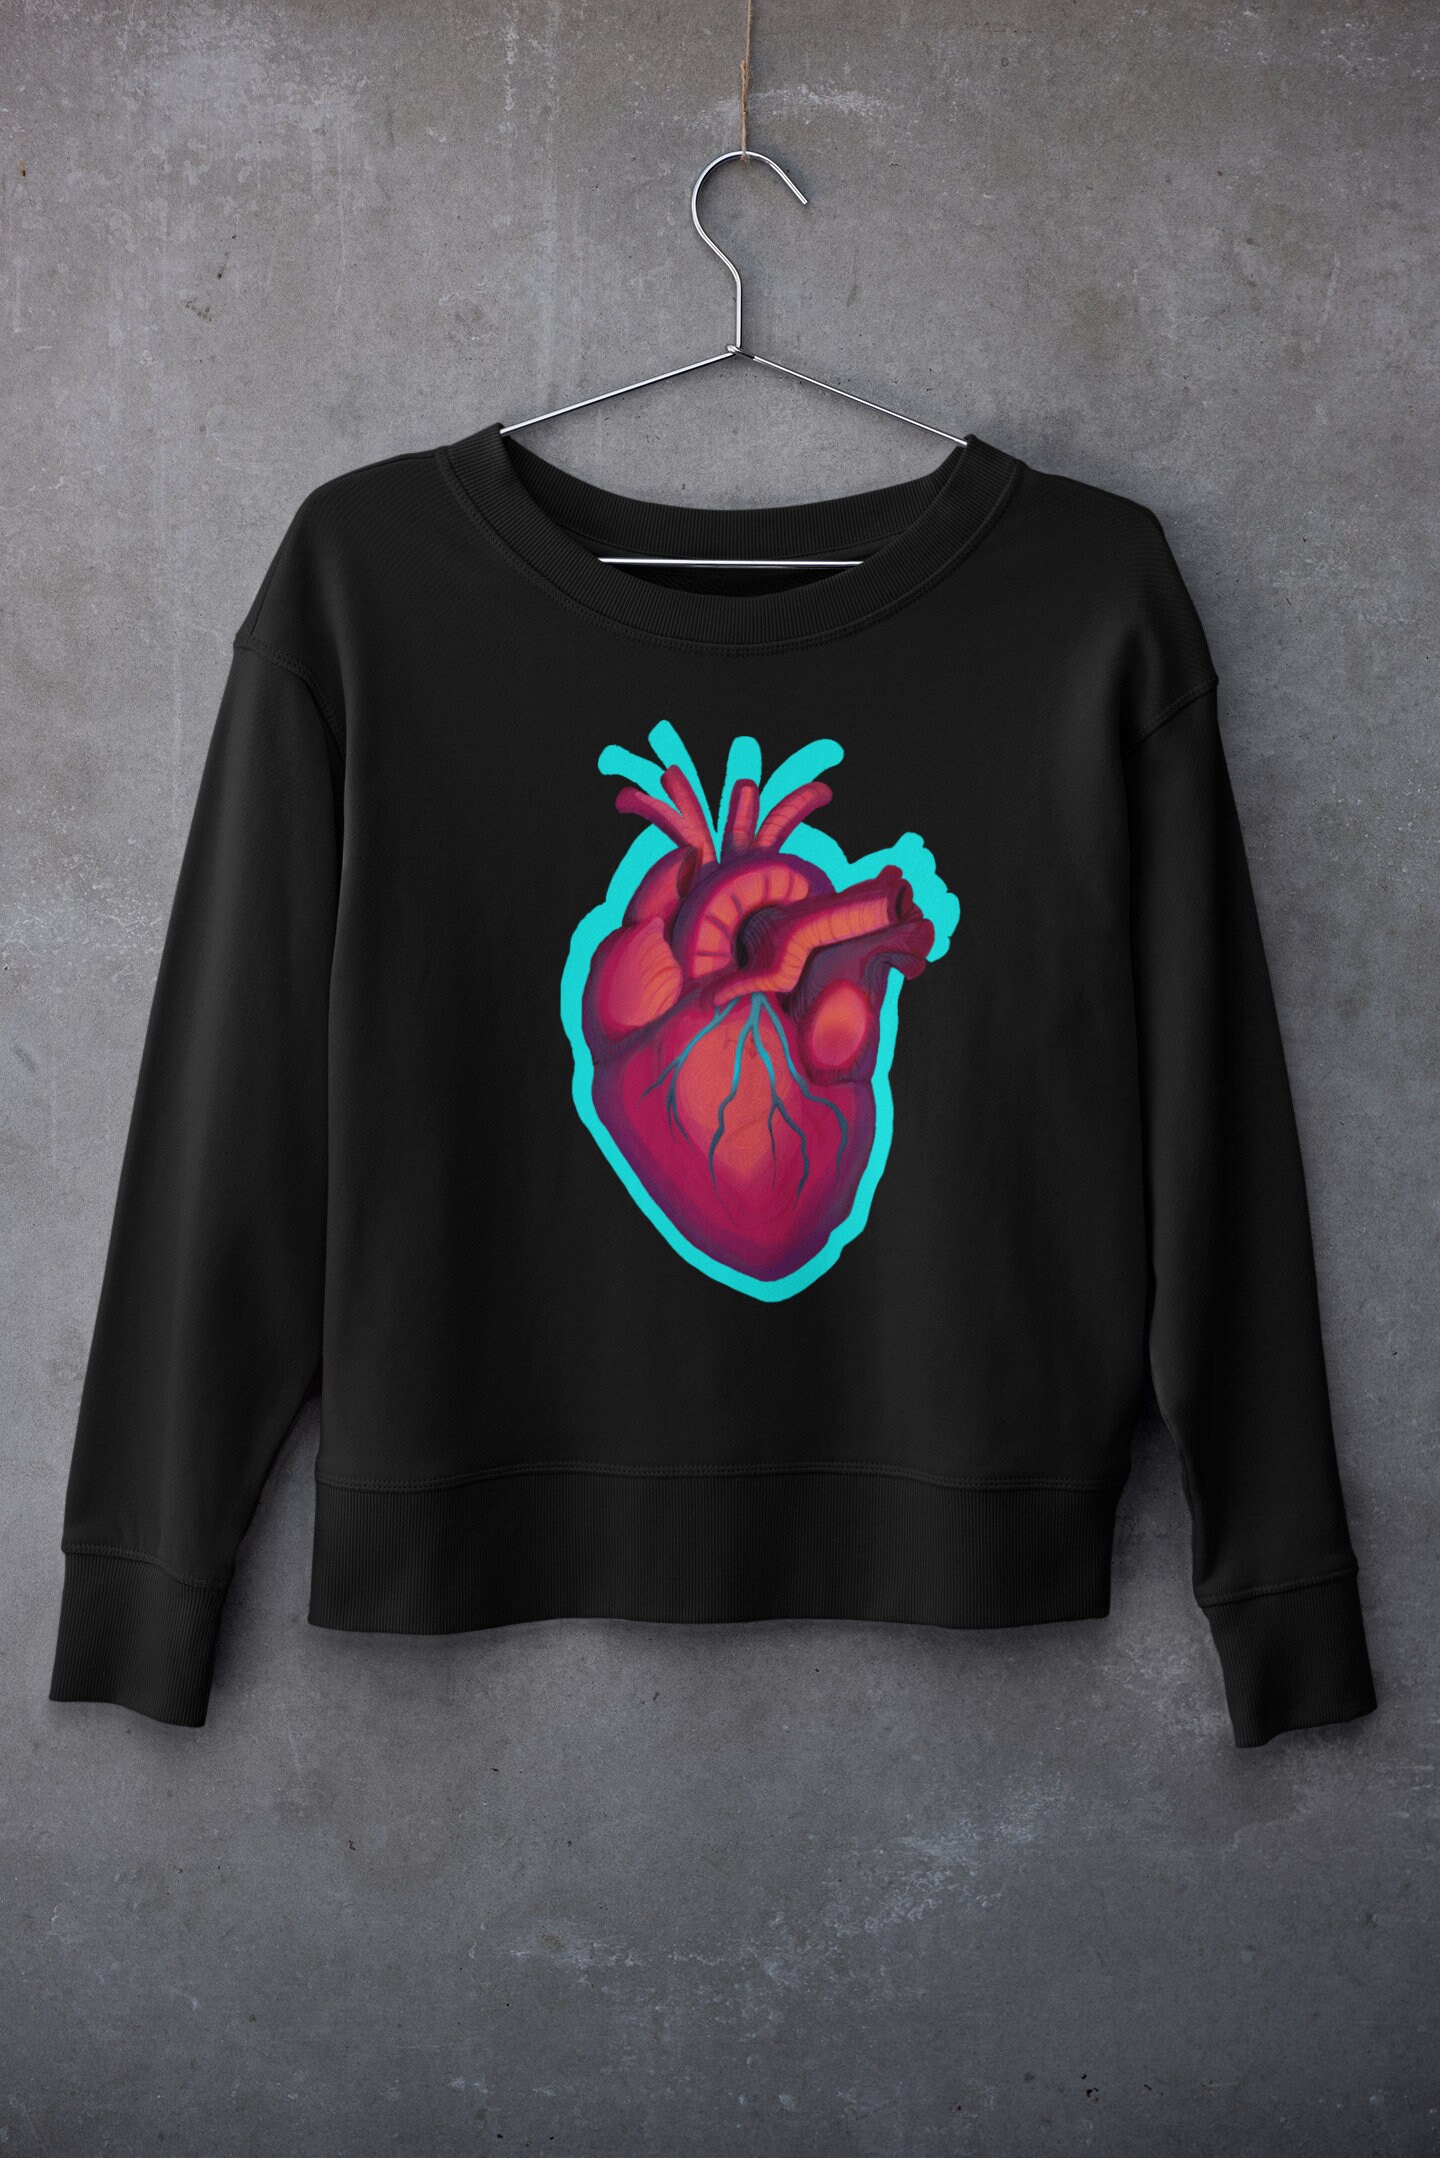 Black heart sweater anatomical heart shirt Human Heart | Etsy